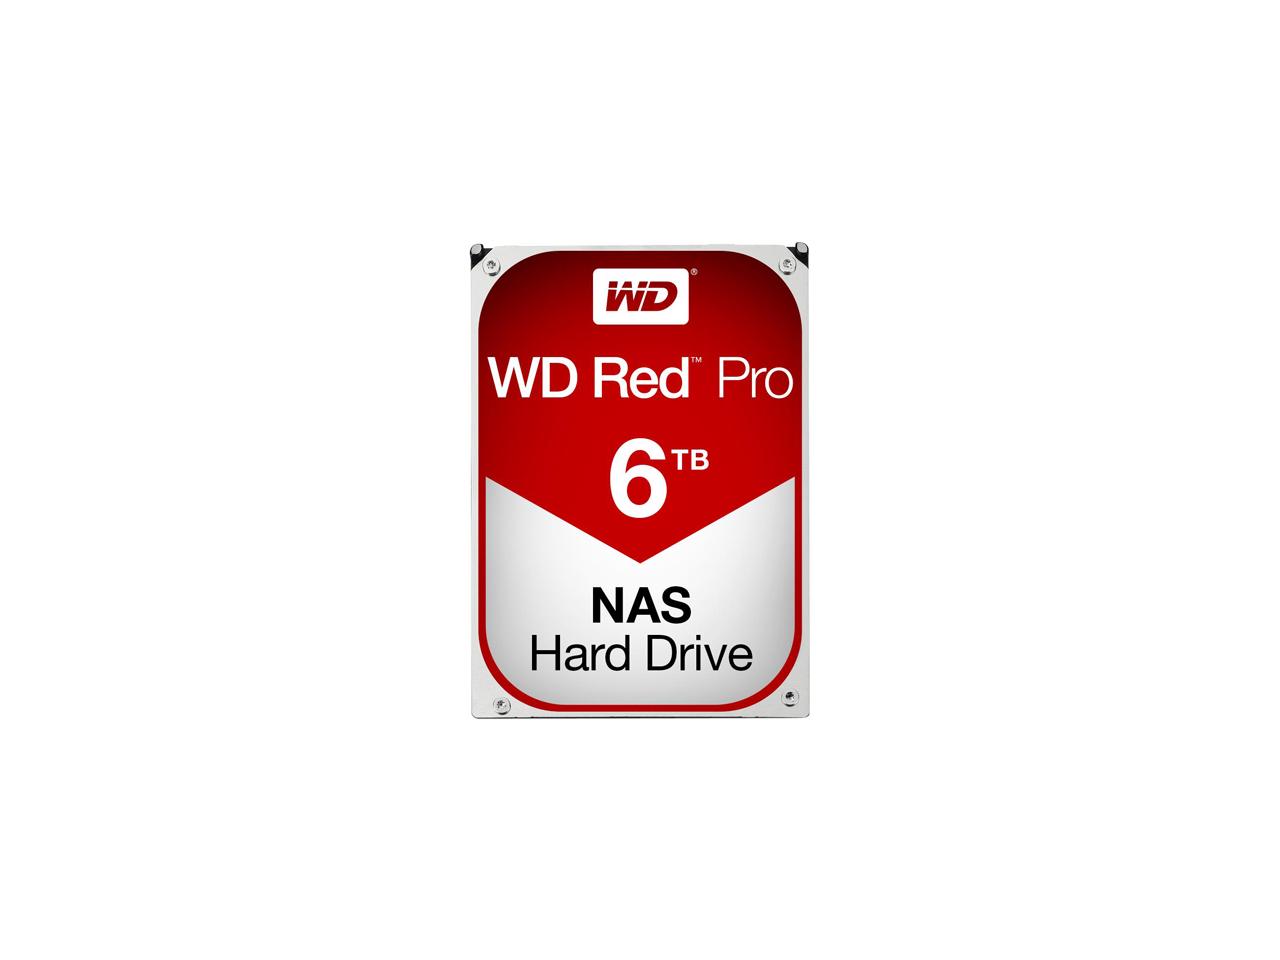 WESTERN DIGITAL RED PRO 6TB NAS HARD DISK DRIVE - 7200 RPM CLASS SATA 6Gb/s 128MB CACHE 3.5 INCH - WD6001FFWX